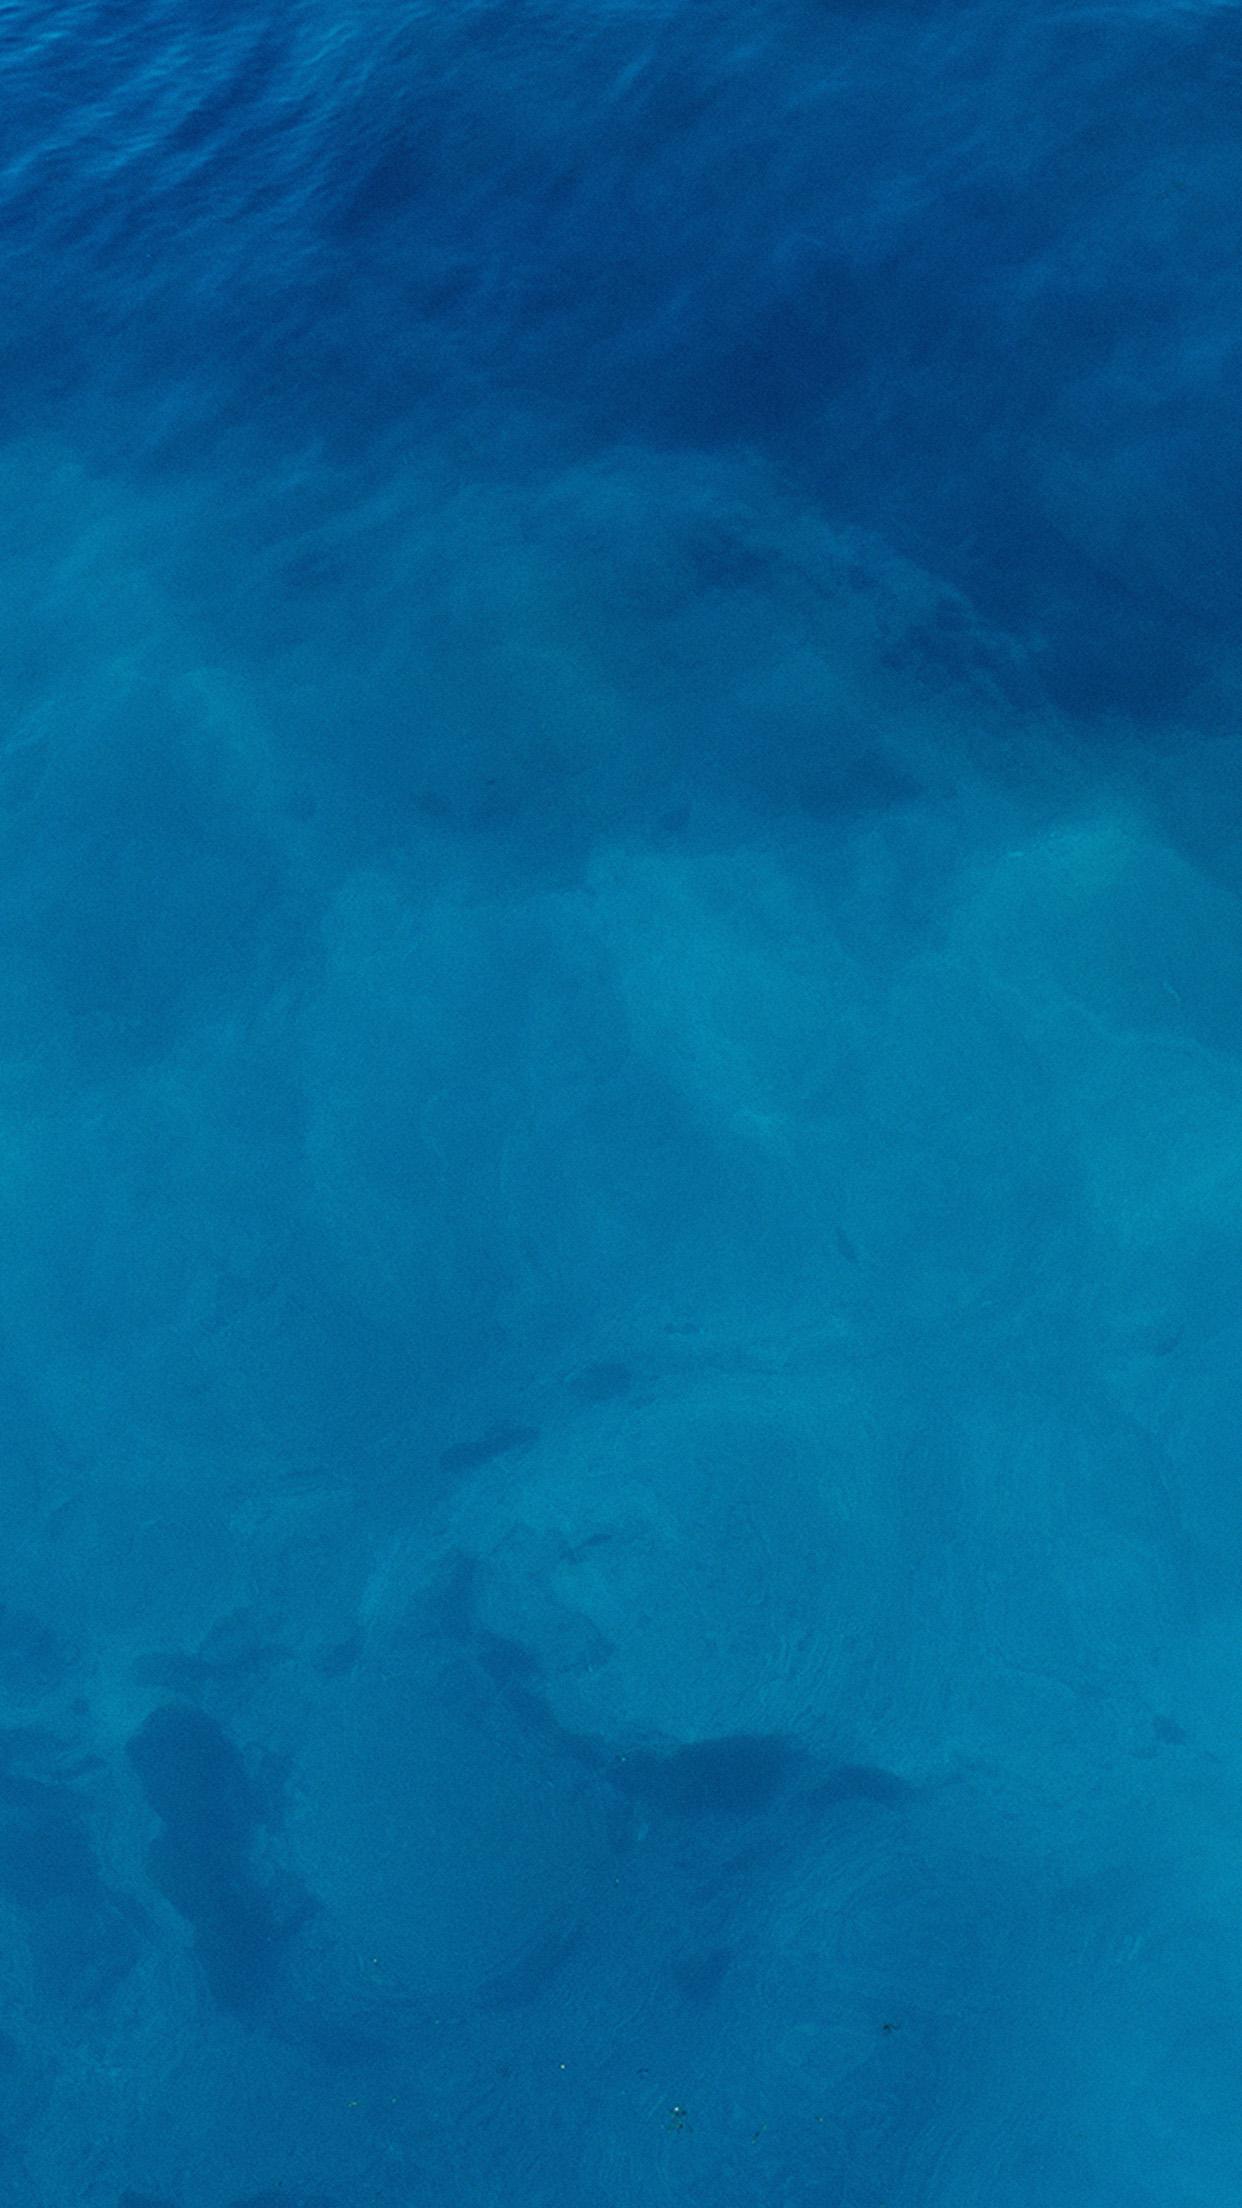 iPhone X wallpaper. blue ocean